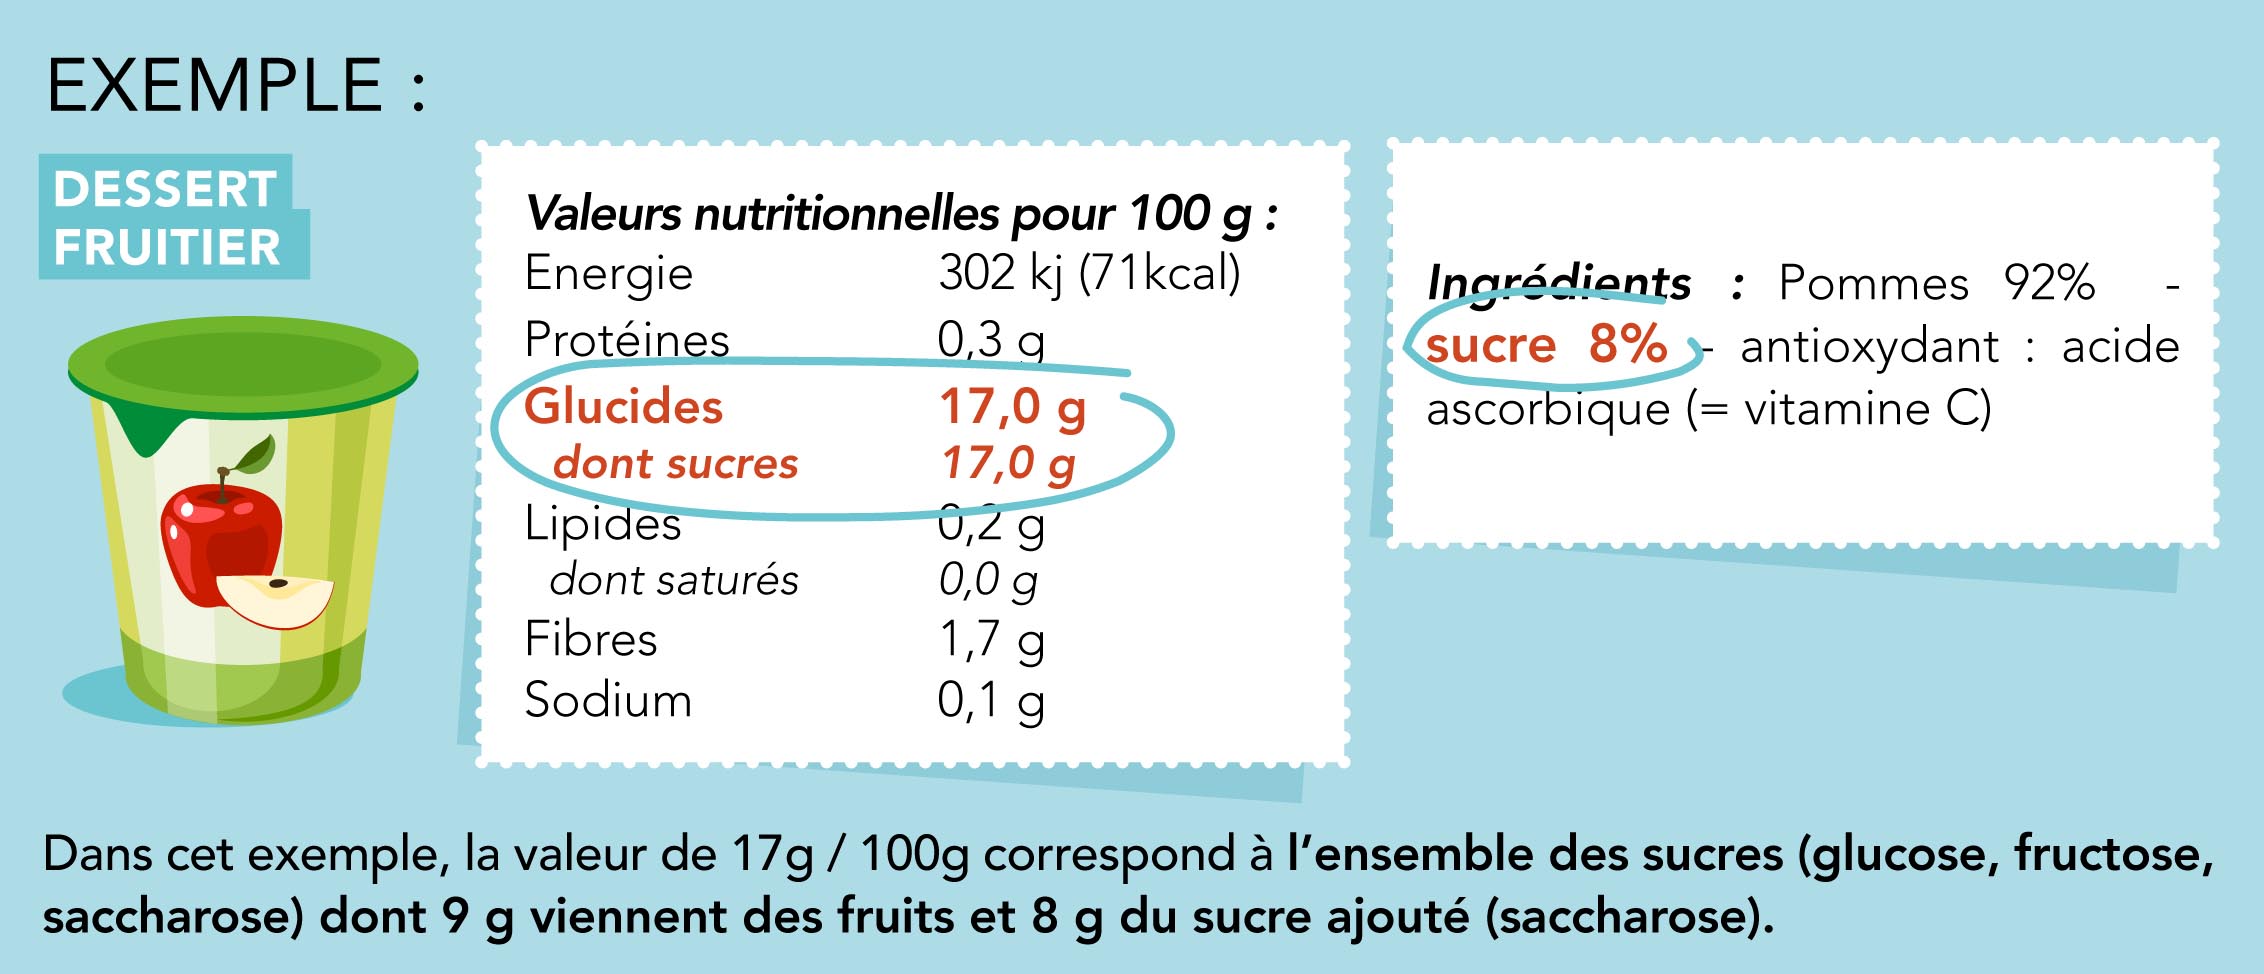 yaourt-valeurs-nutritionnelles-ingredients